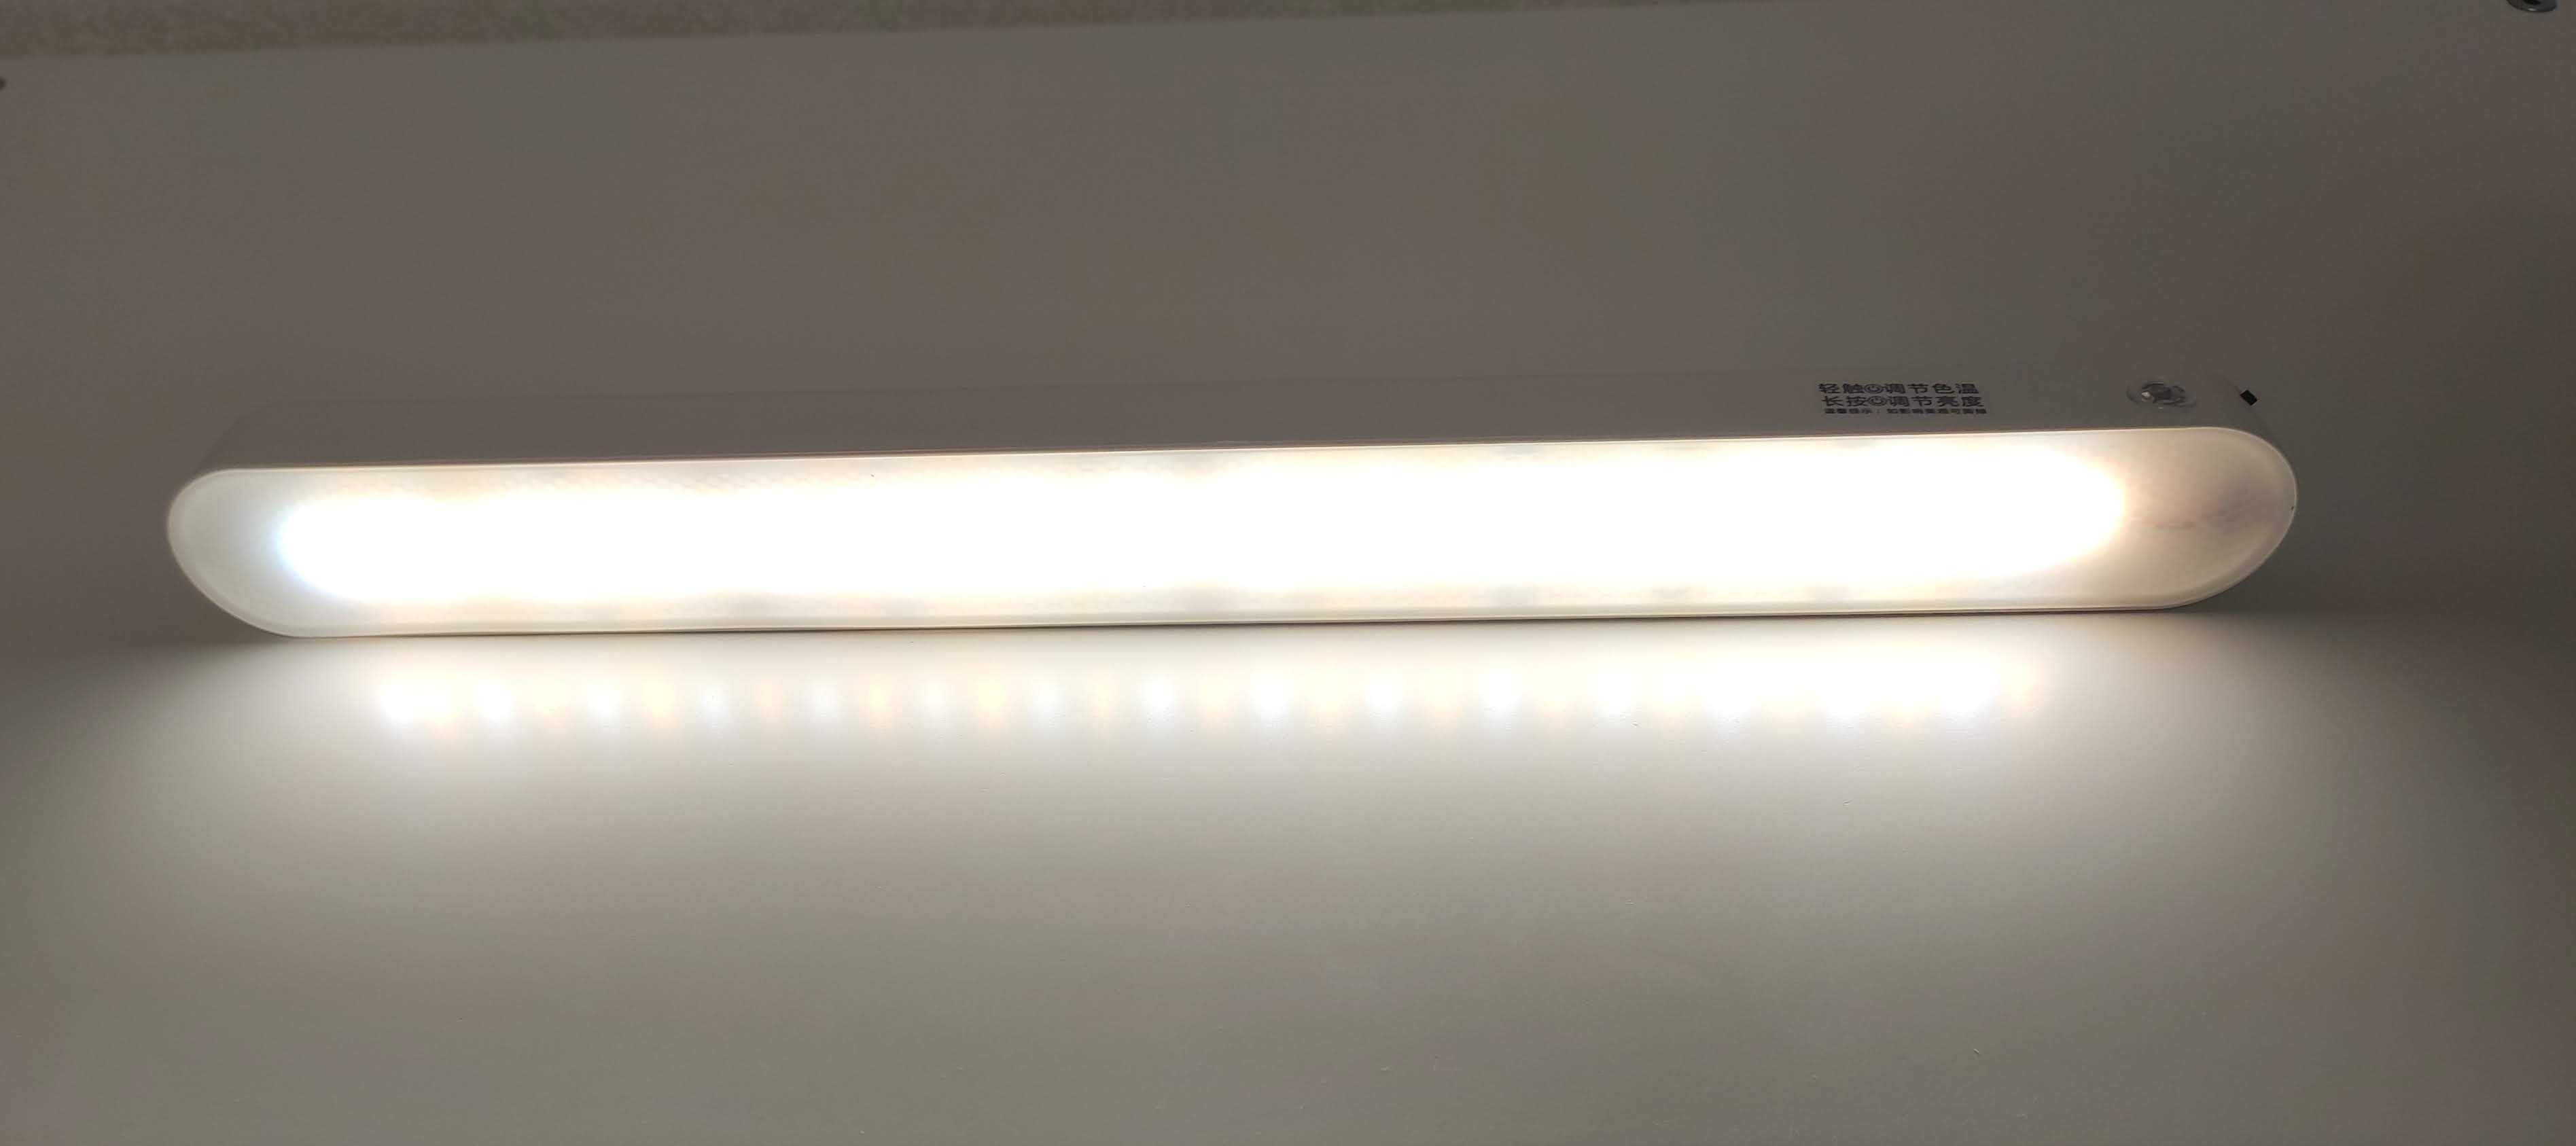 LED светильник 40 см фонарь на  аккумуляторах 2х18650  перезаряжаем